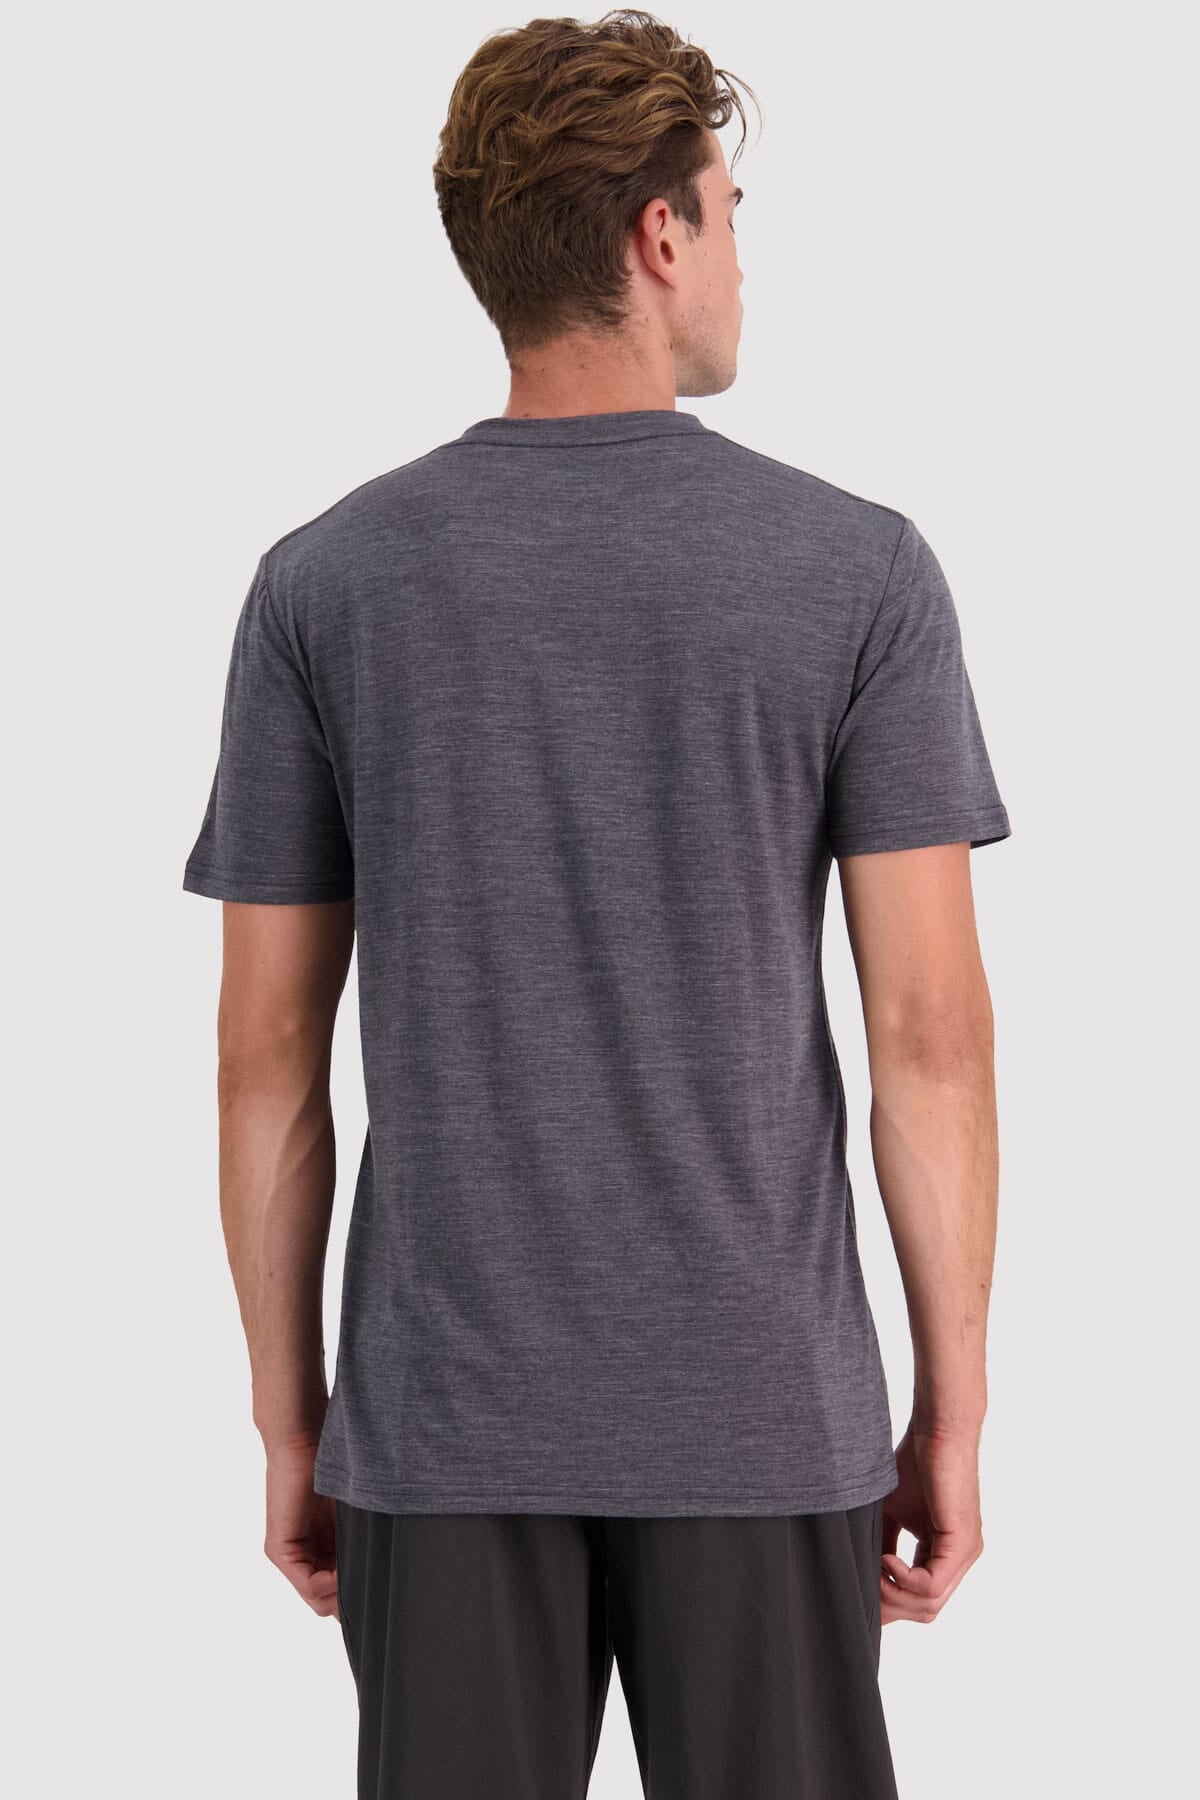 Zephyr Merino Cool T-Shirt - Smoke